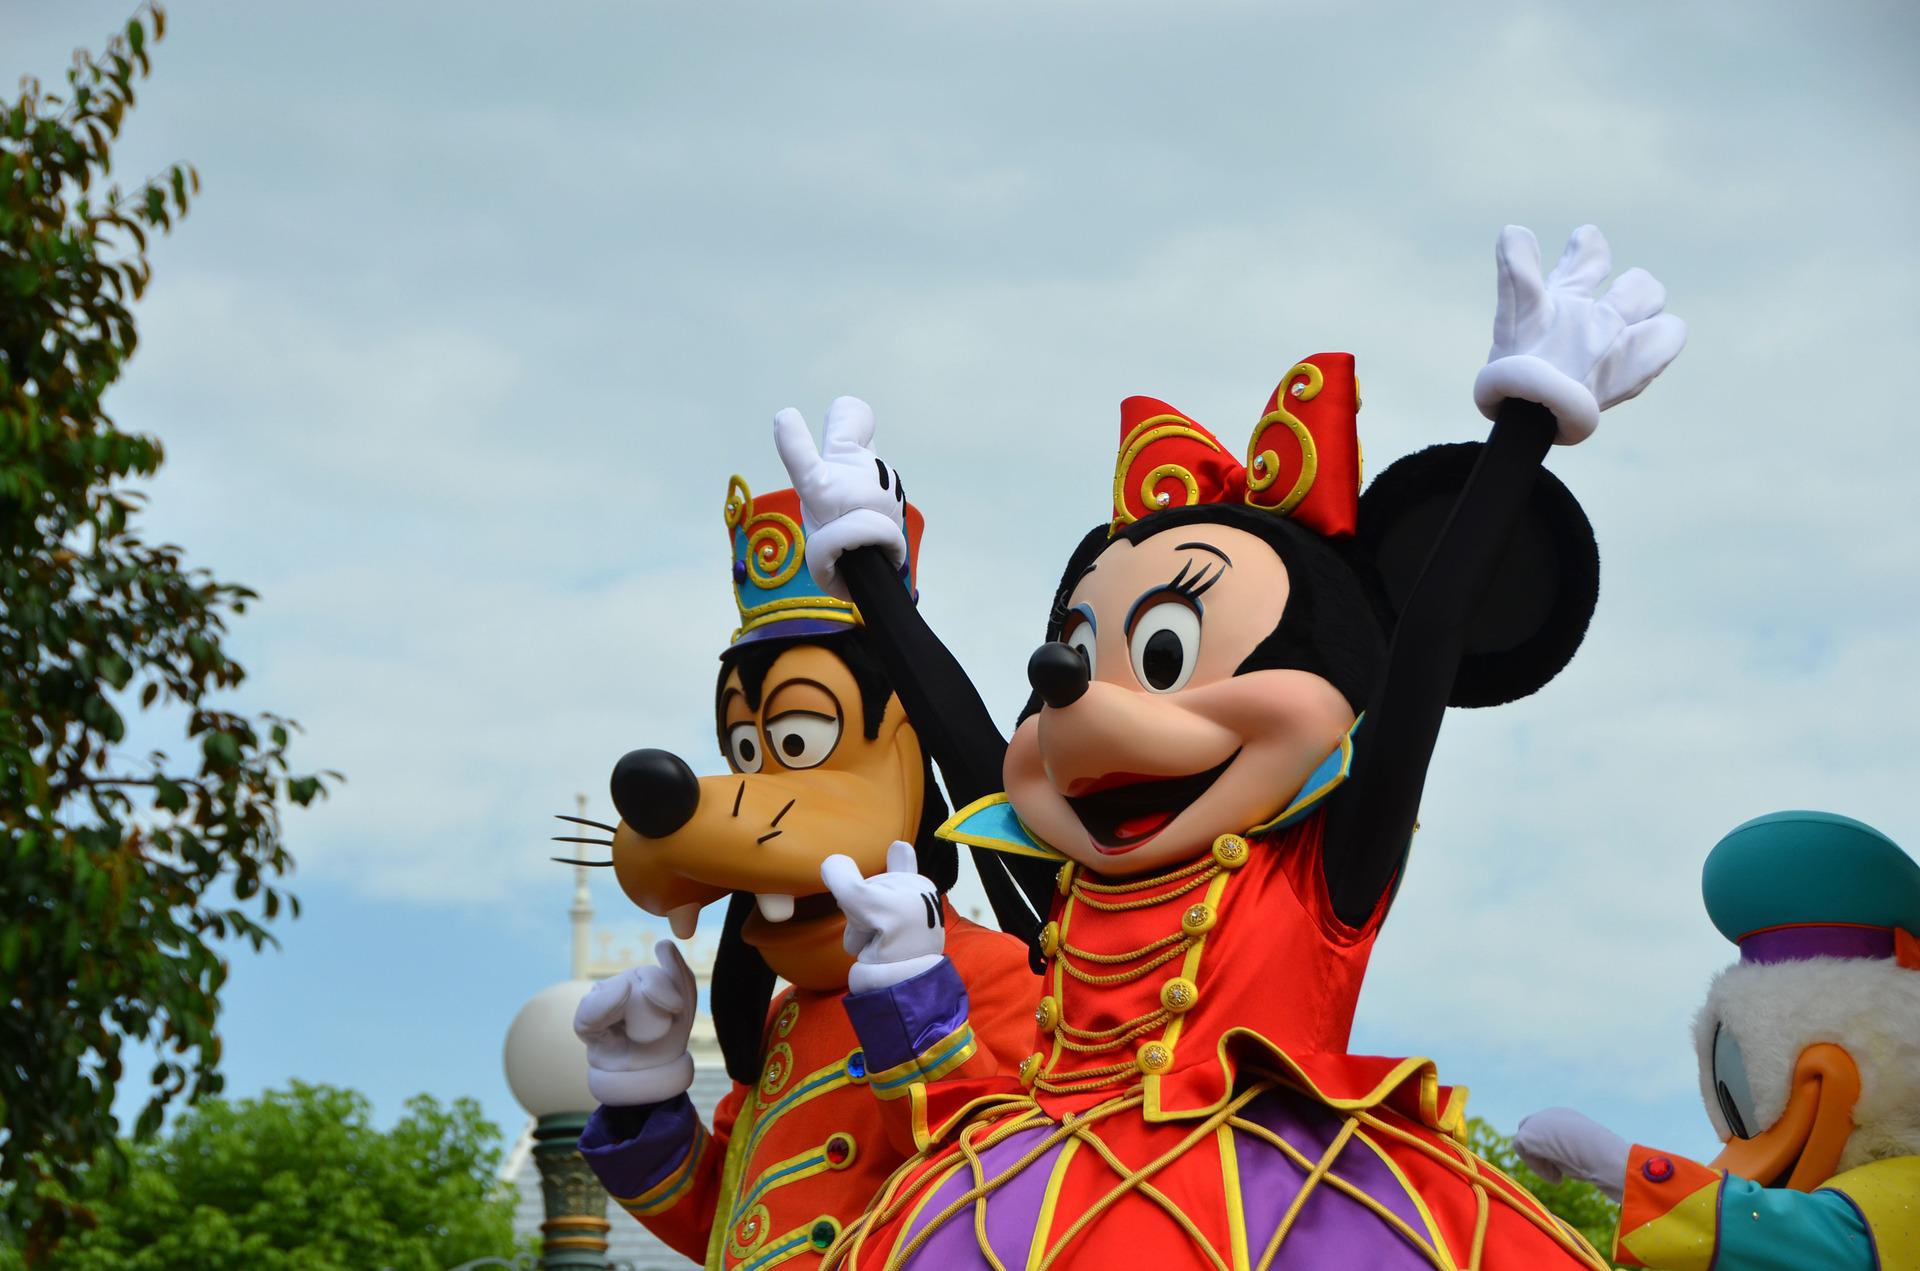 Little Robbie yearned to meet his favorite Disney characters in Disneyland. | Source: Pixabay